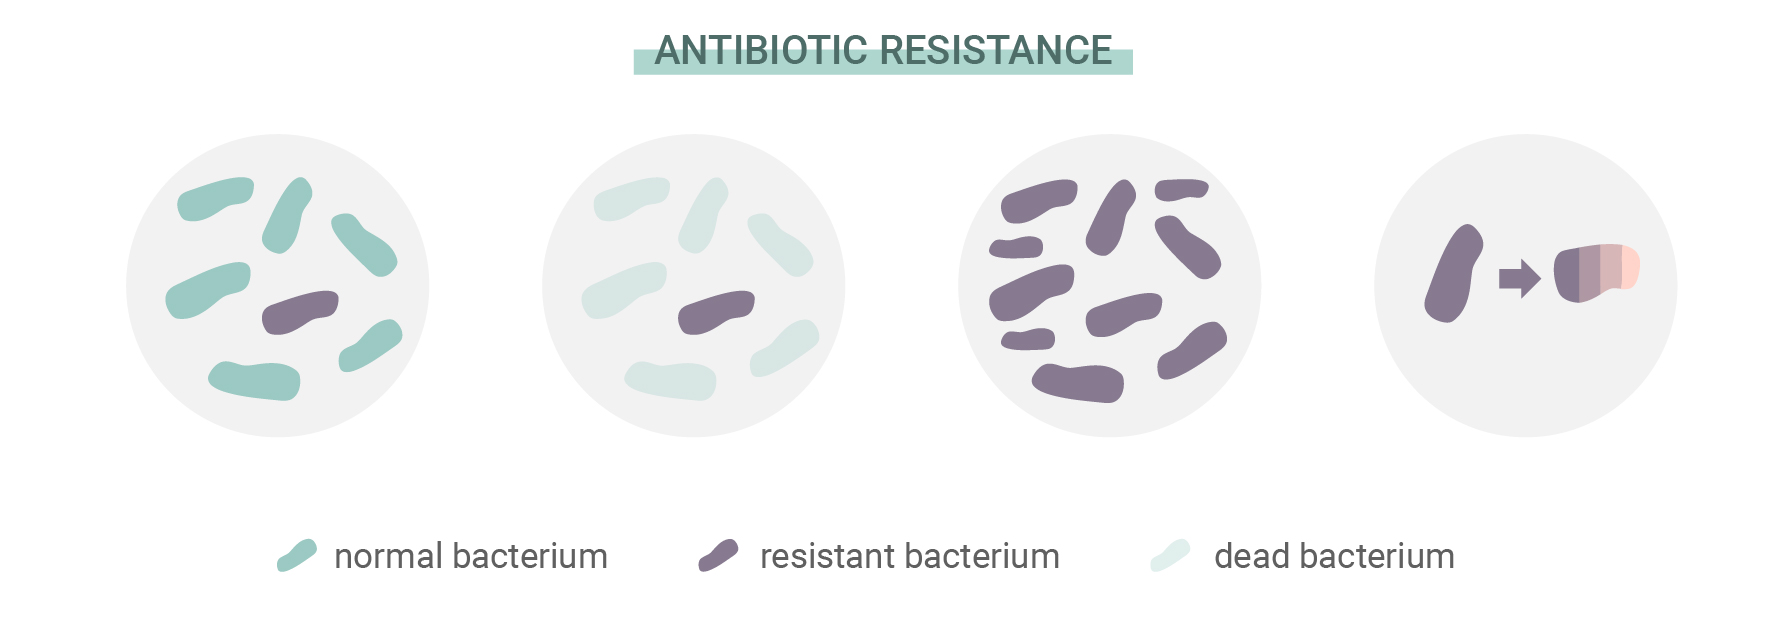 What Is Antibiotic Resistance?